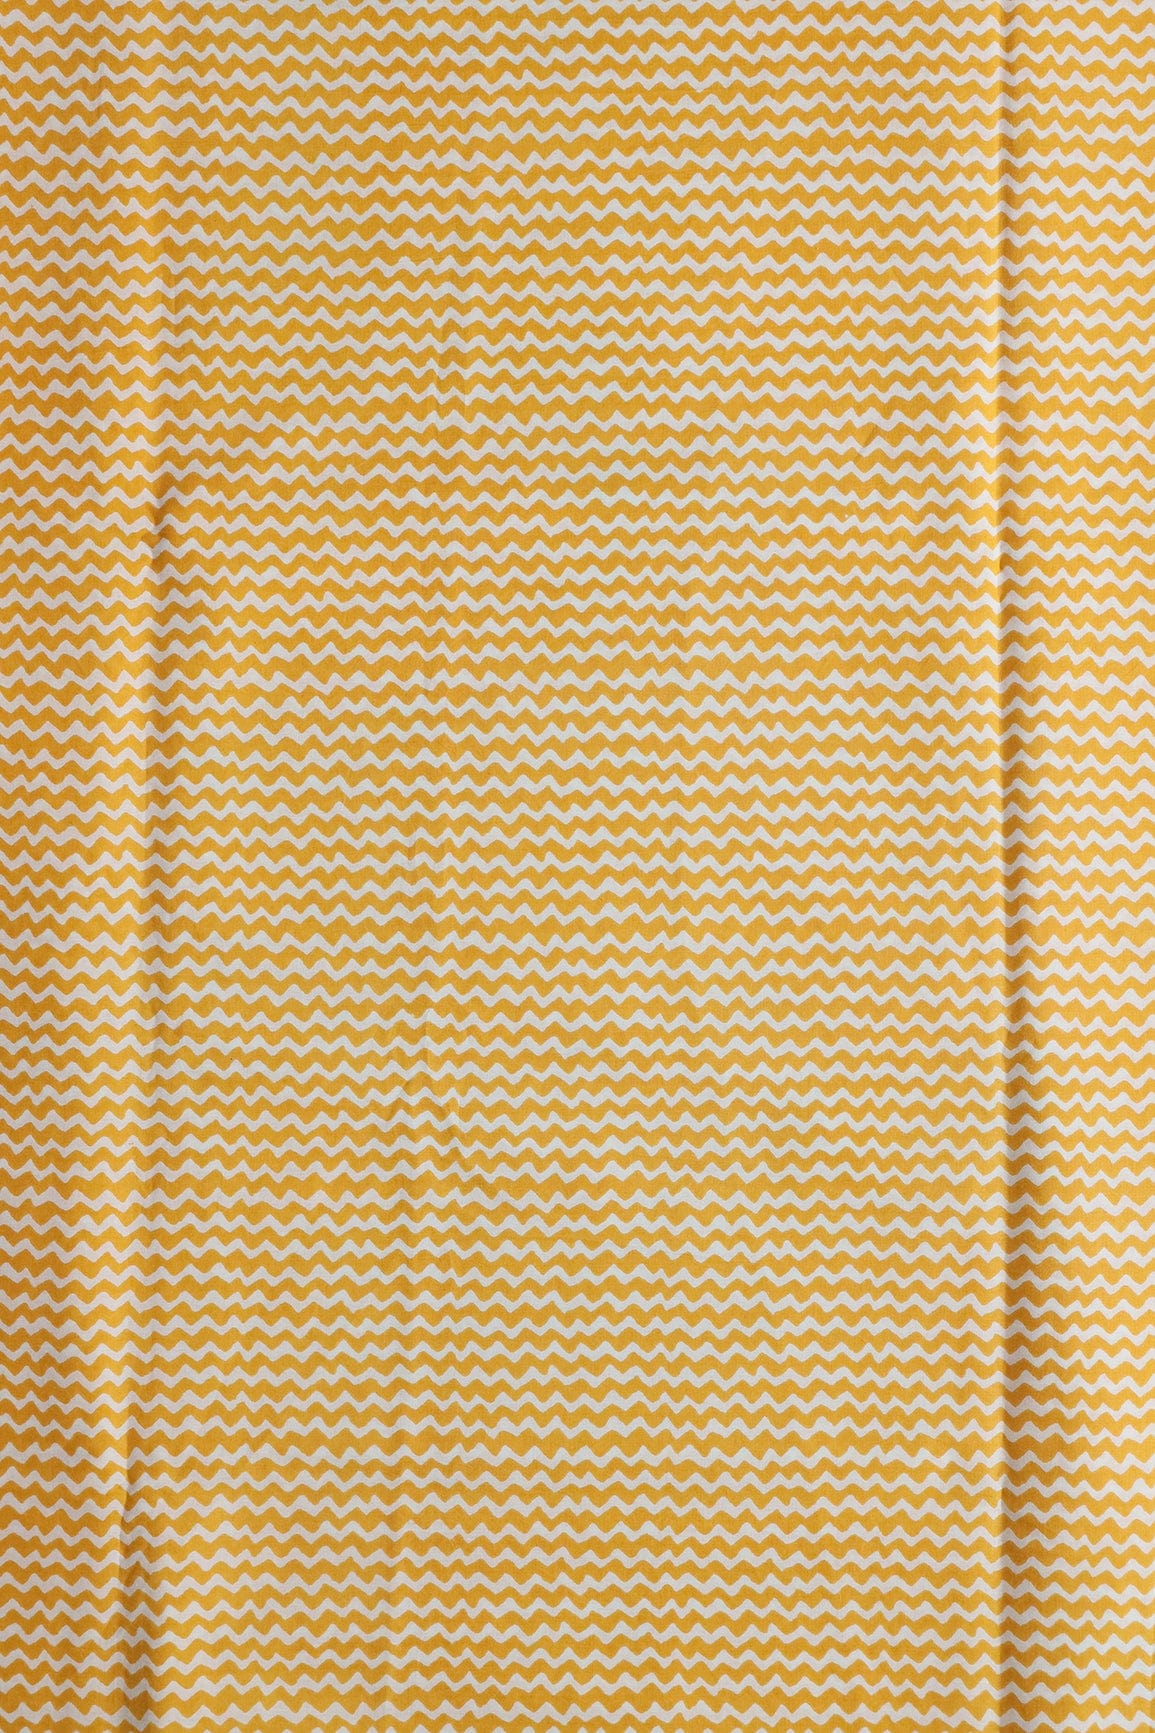 doeraa Prints Yellow And White Chevron Print On Pure Cotton Fabric